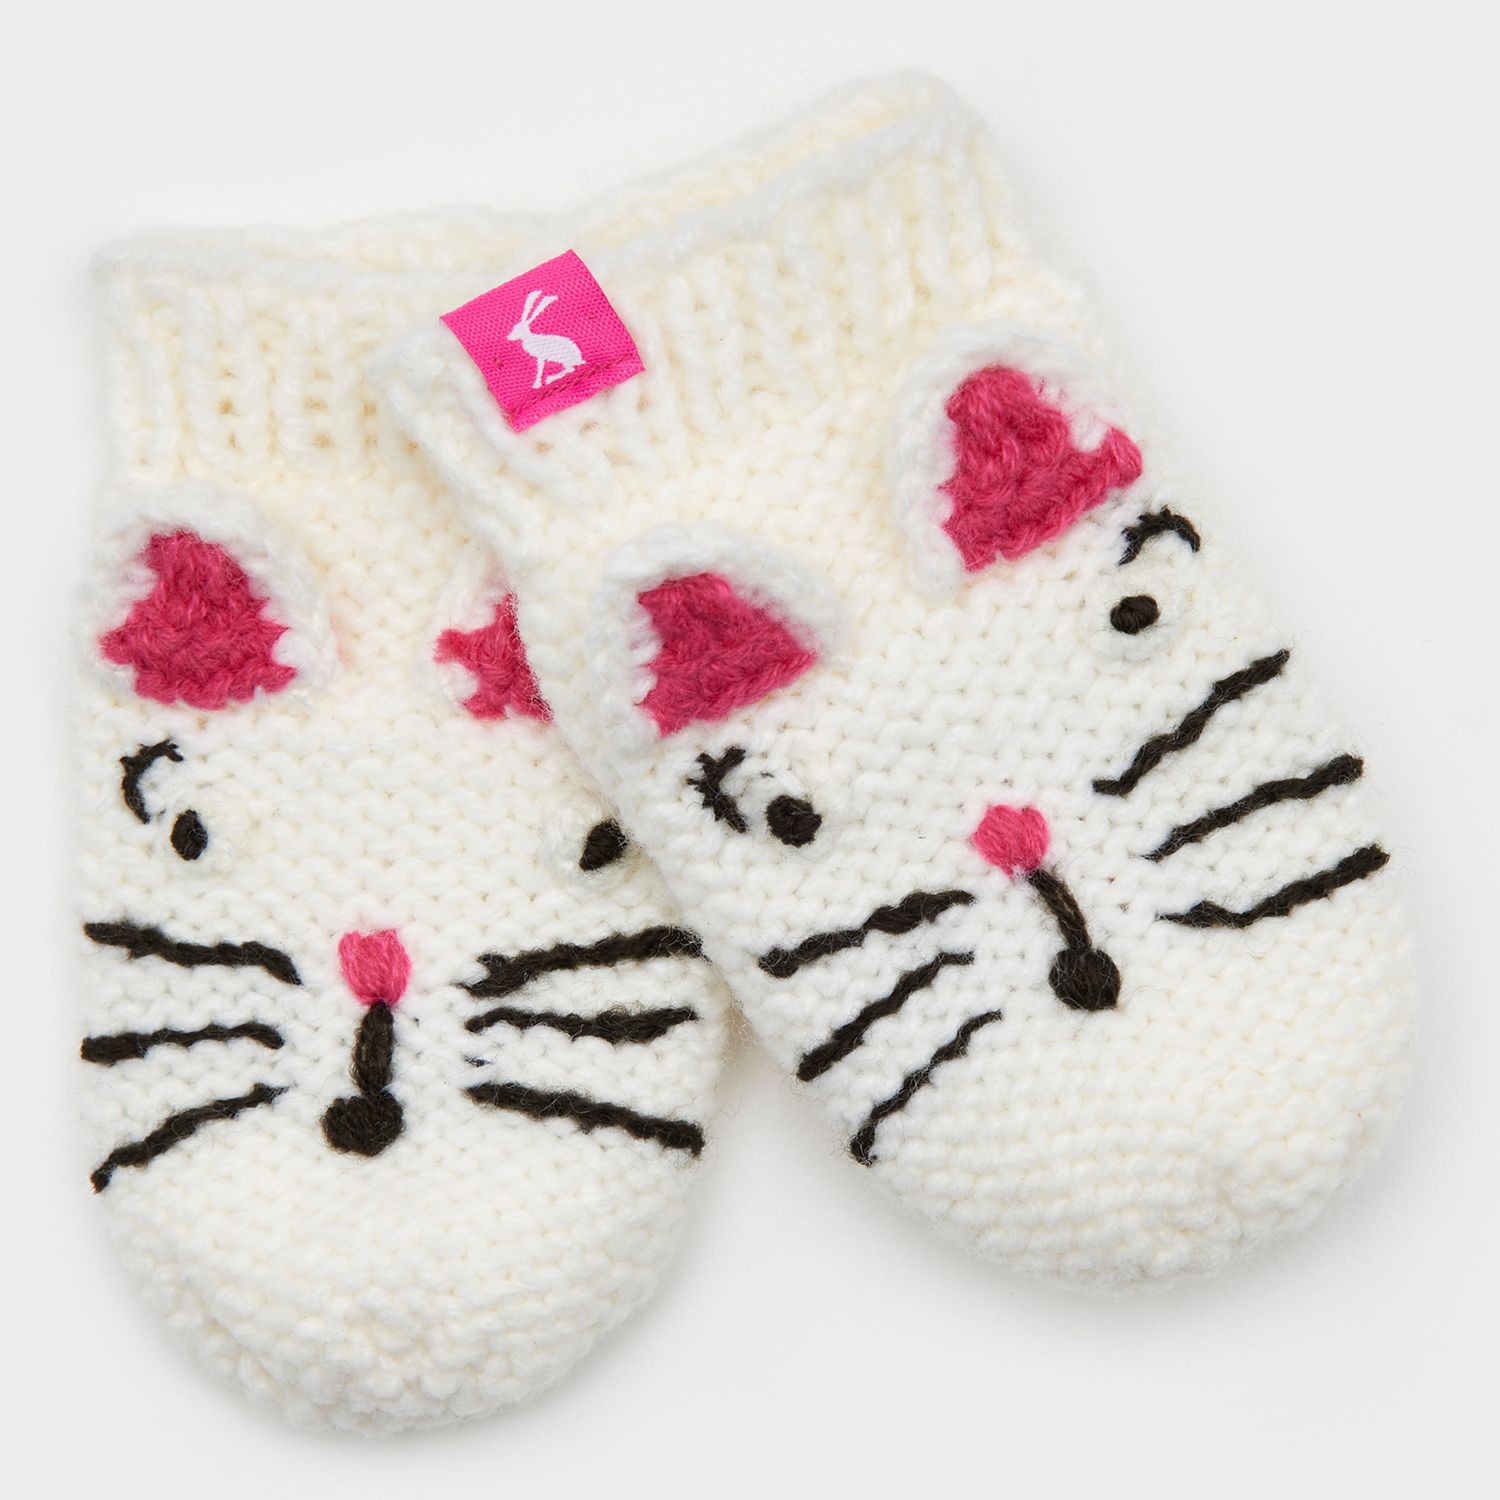 buy baby mittens